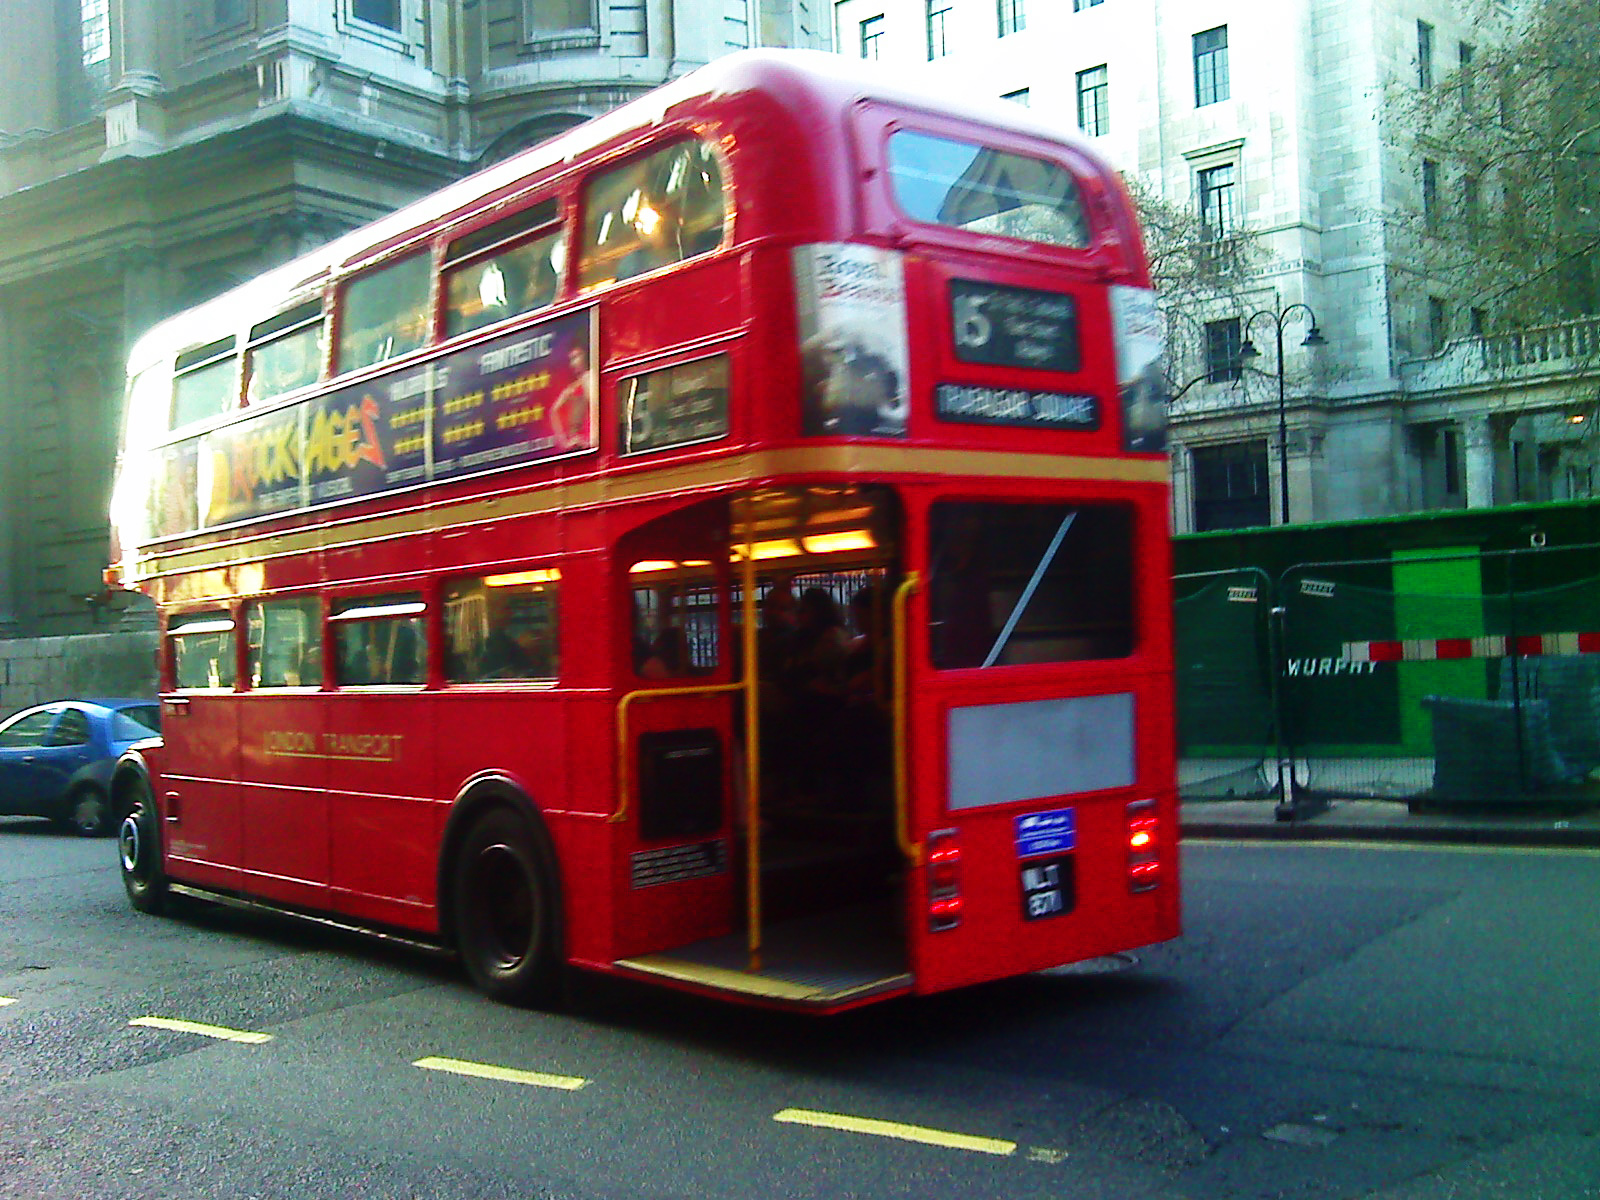 Double decker bus, putovanje u London